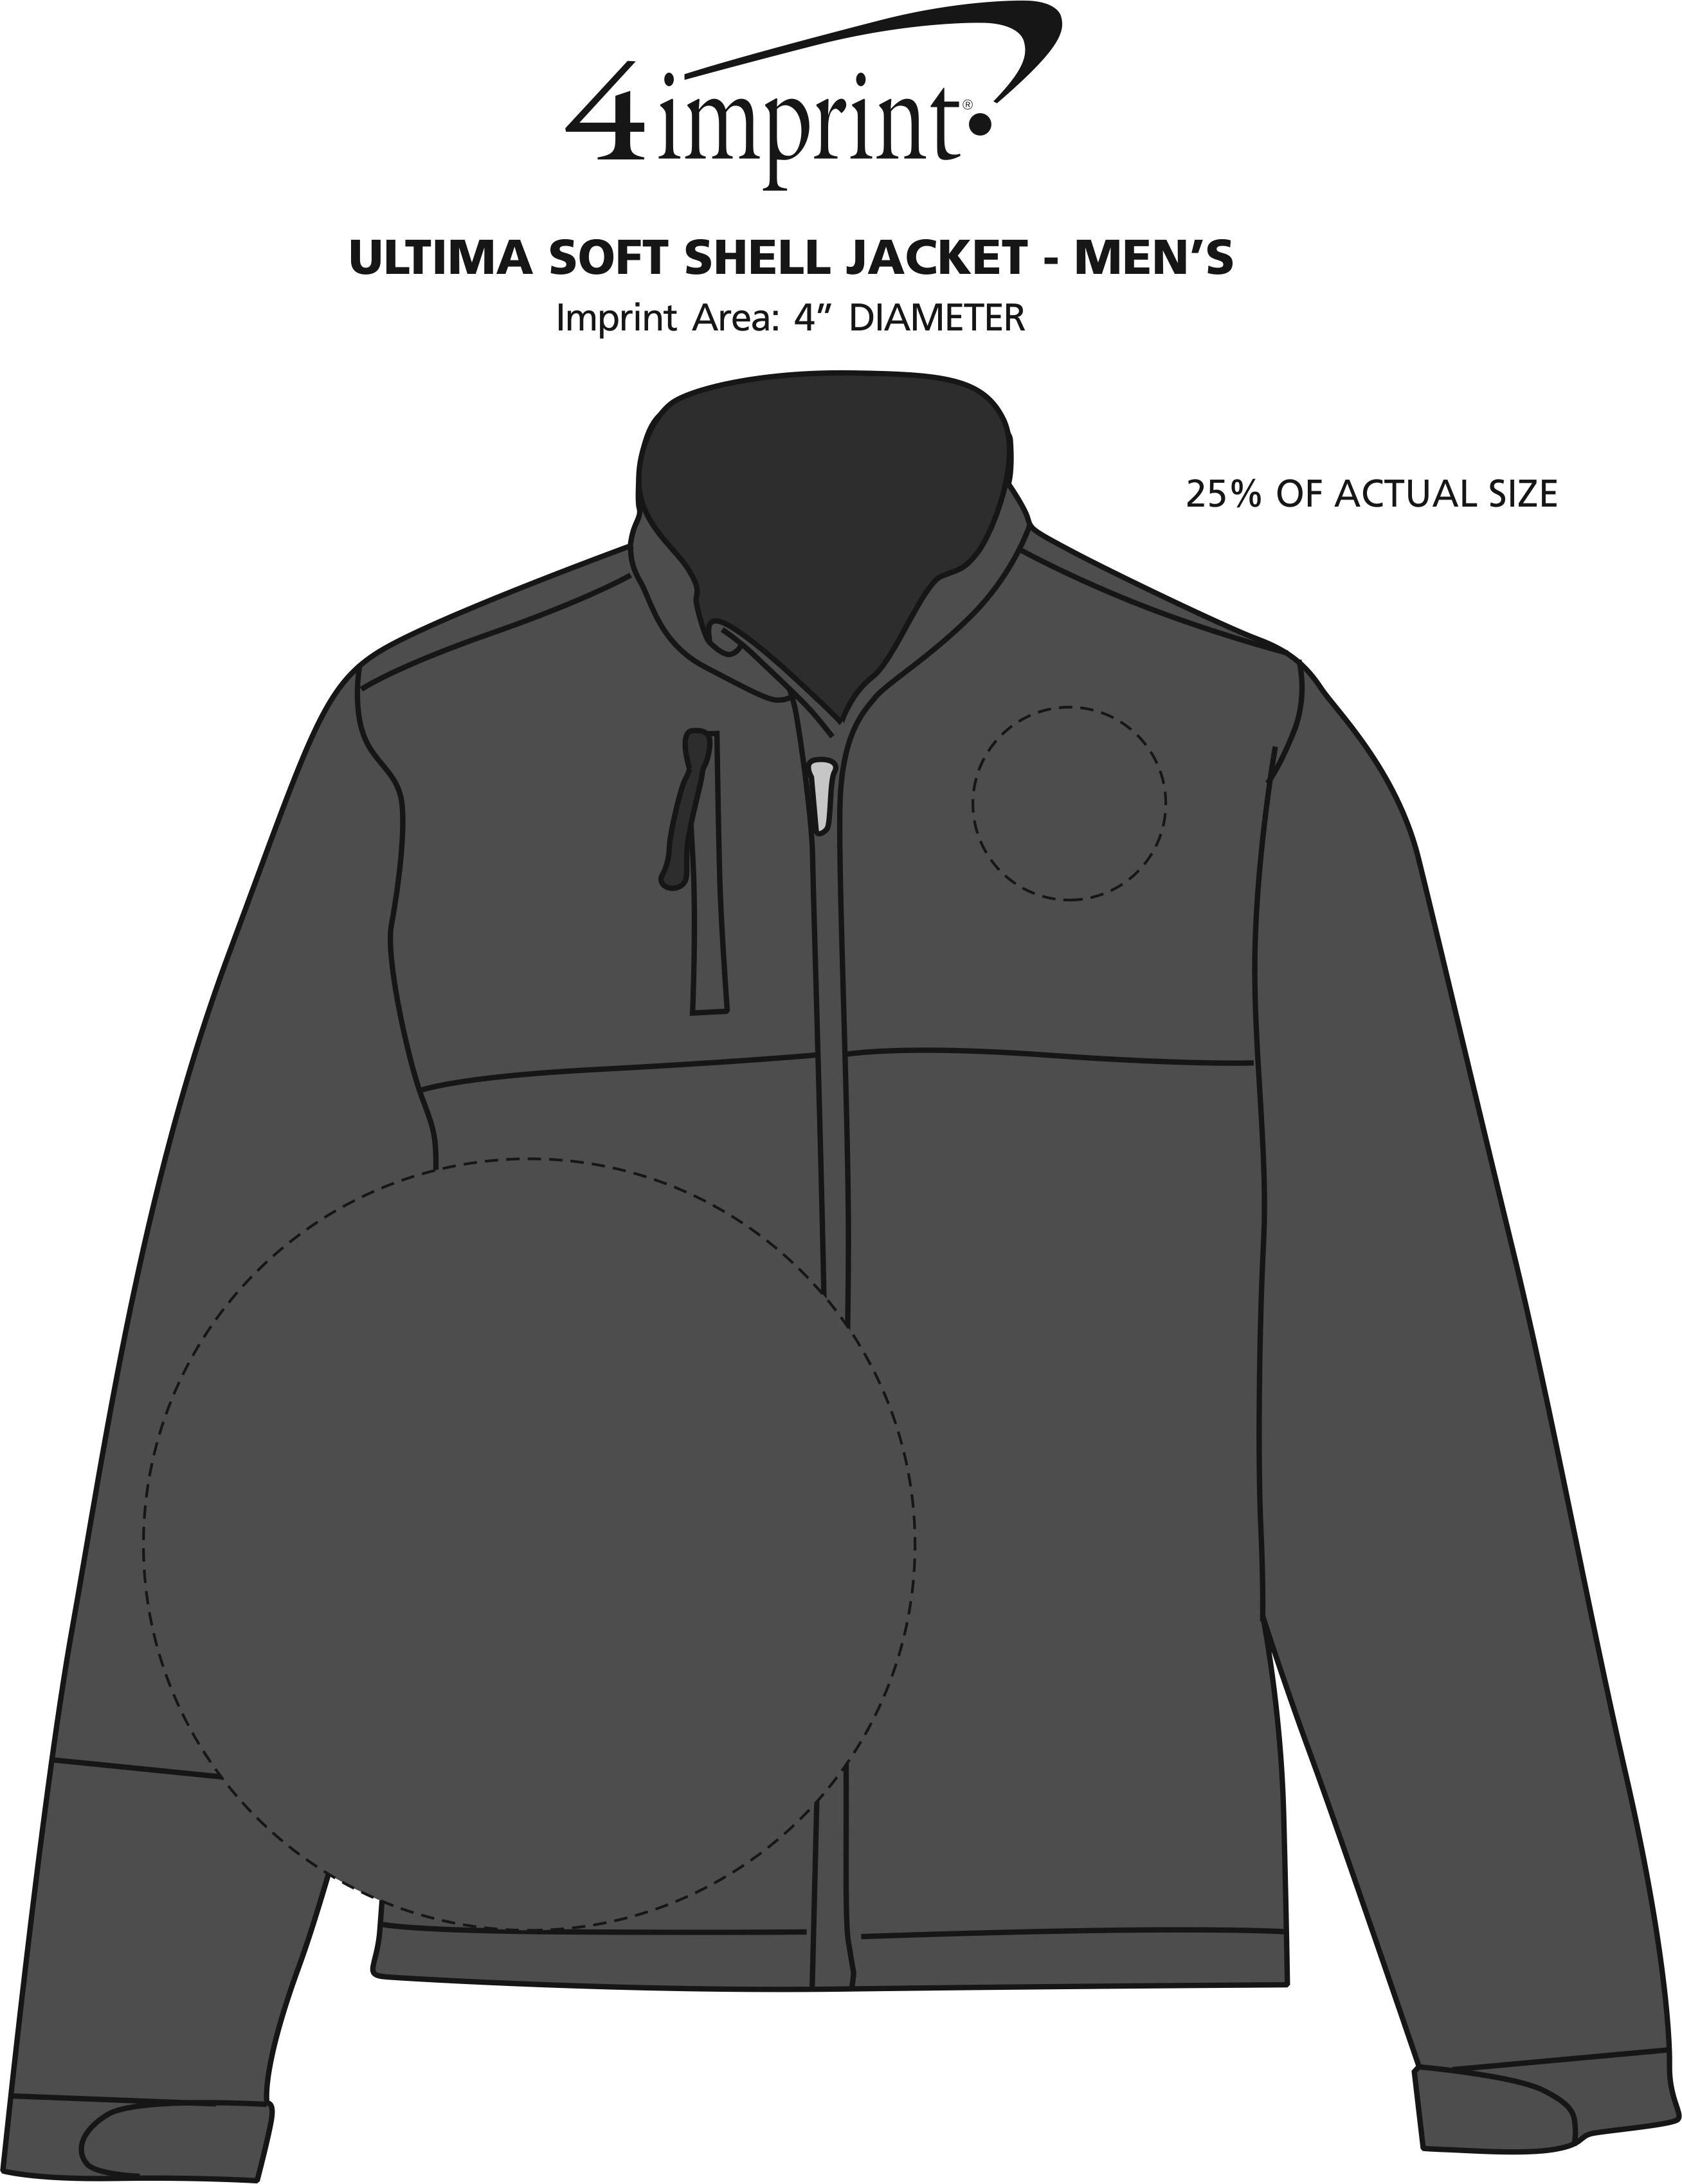 4imprint.com: Ultima Soft Shell Jacket - Men's 115953-M